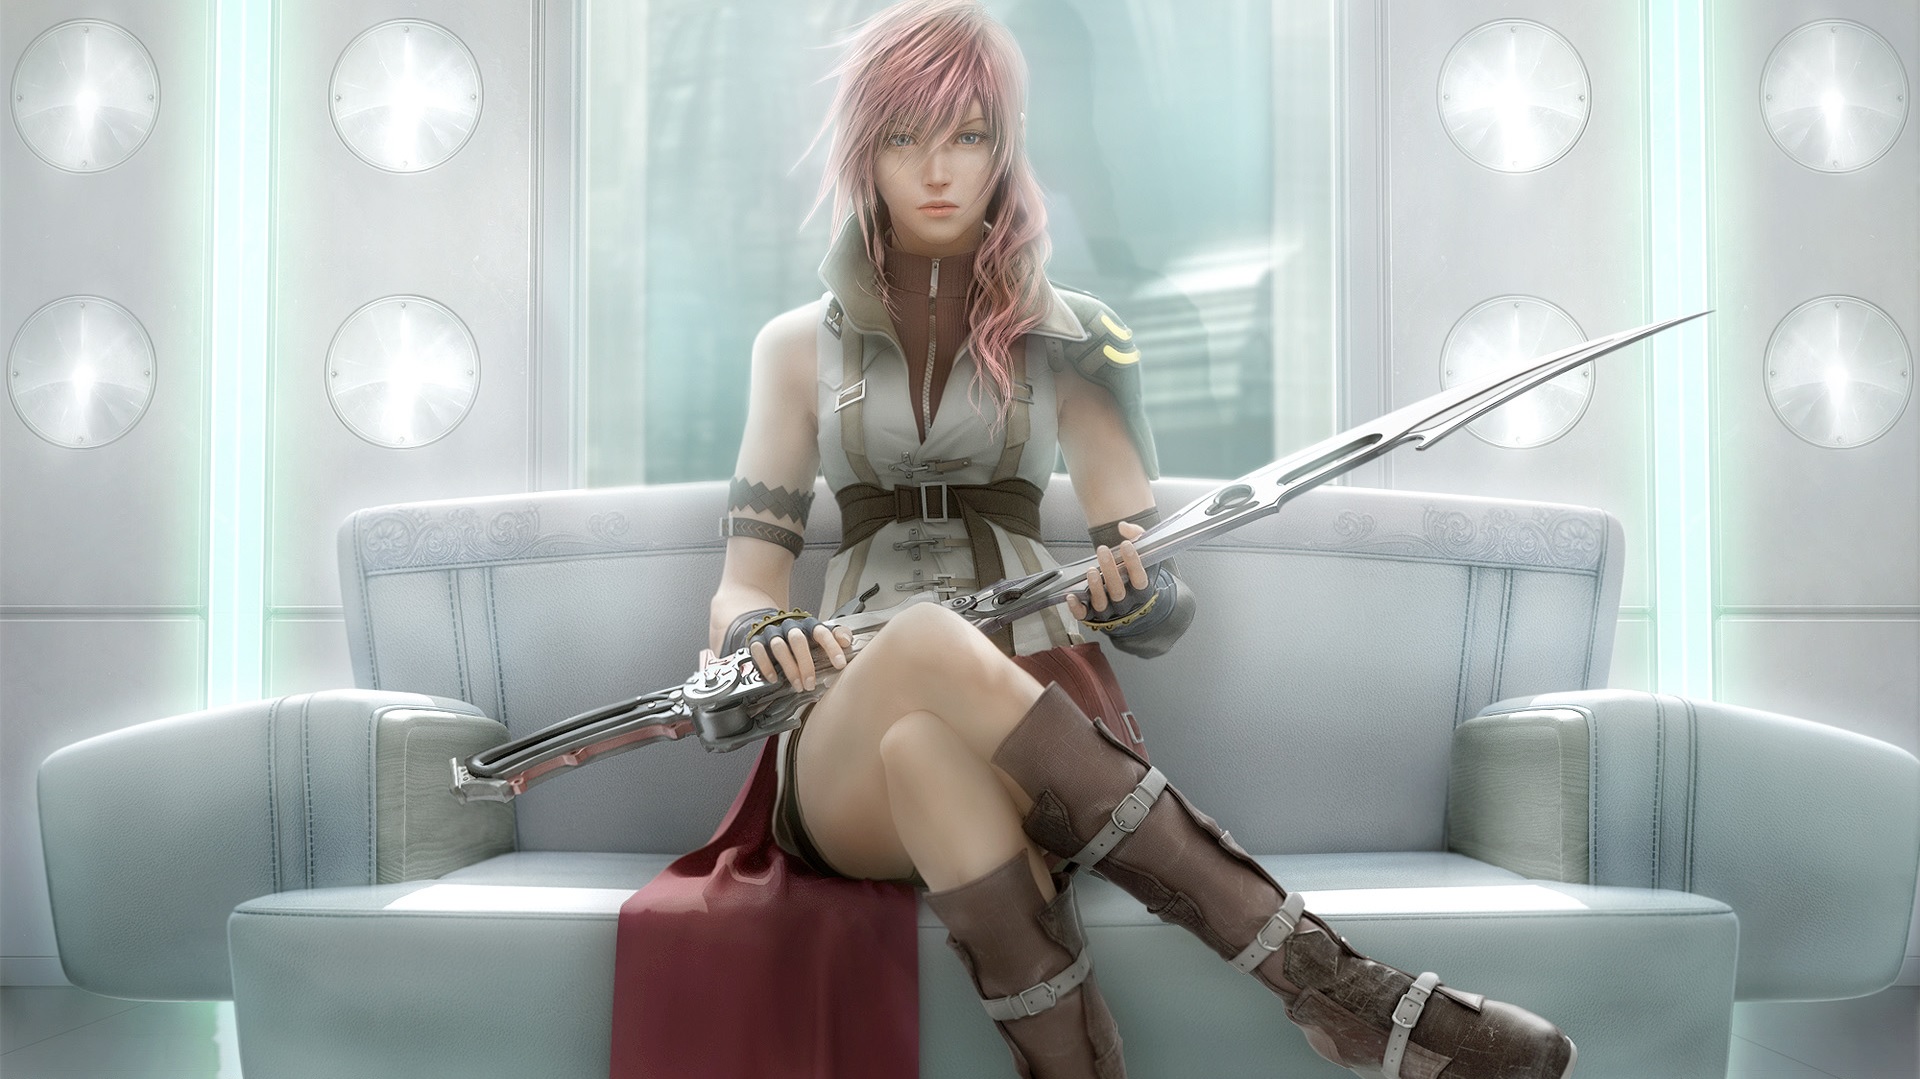 Lightning Returns Final Fantasy Xiii Pc Now Targets An Autumn Release